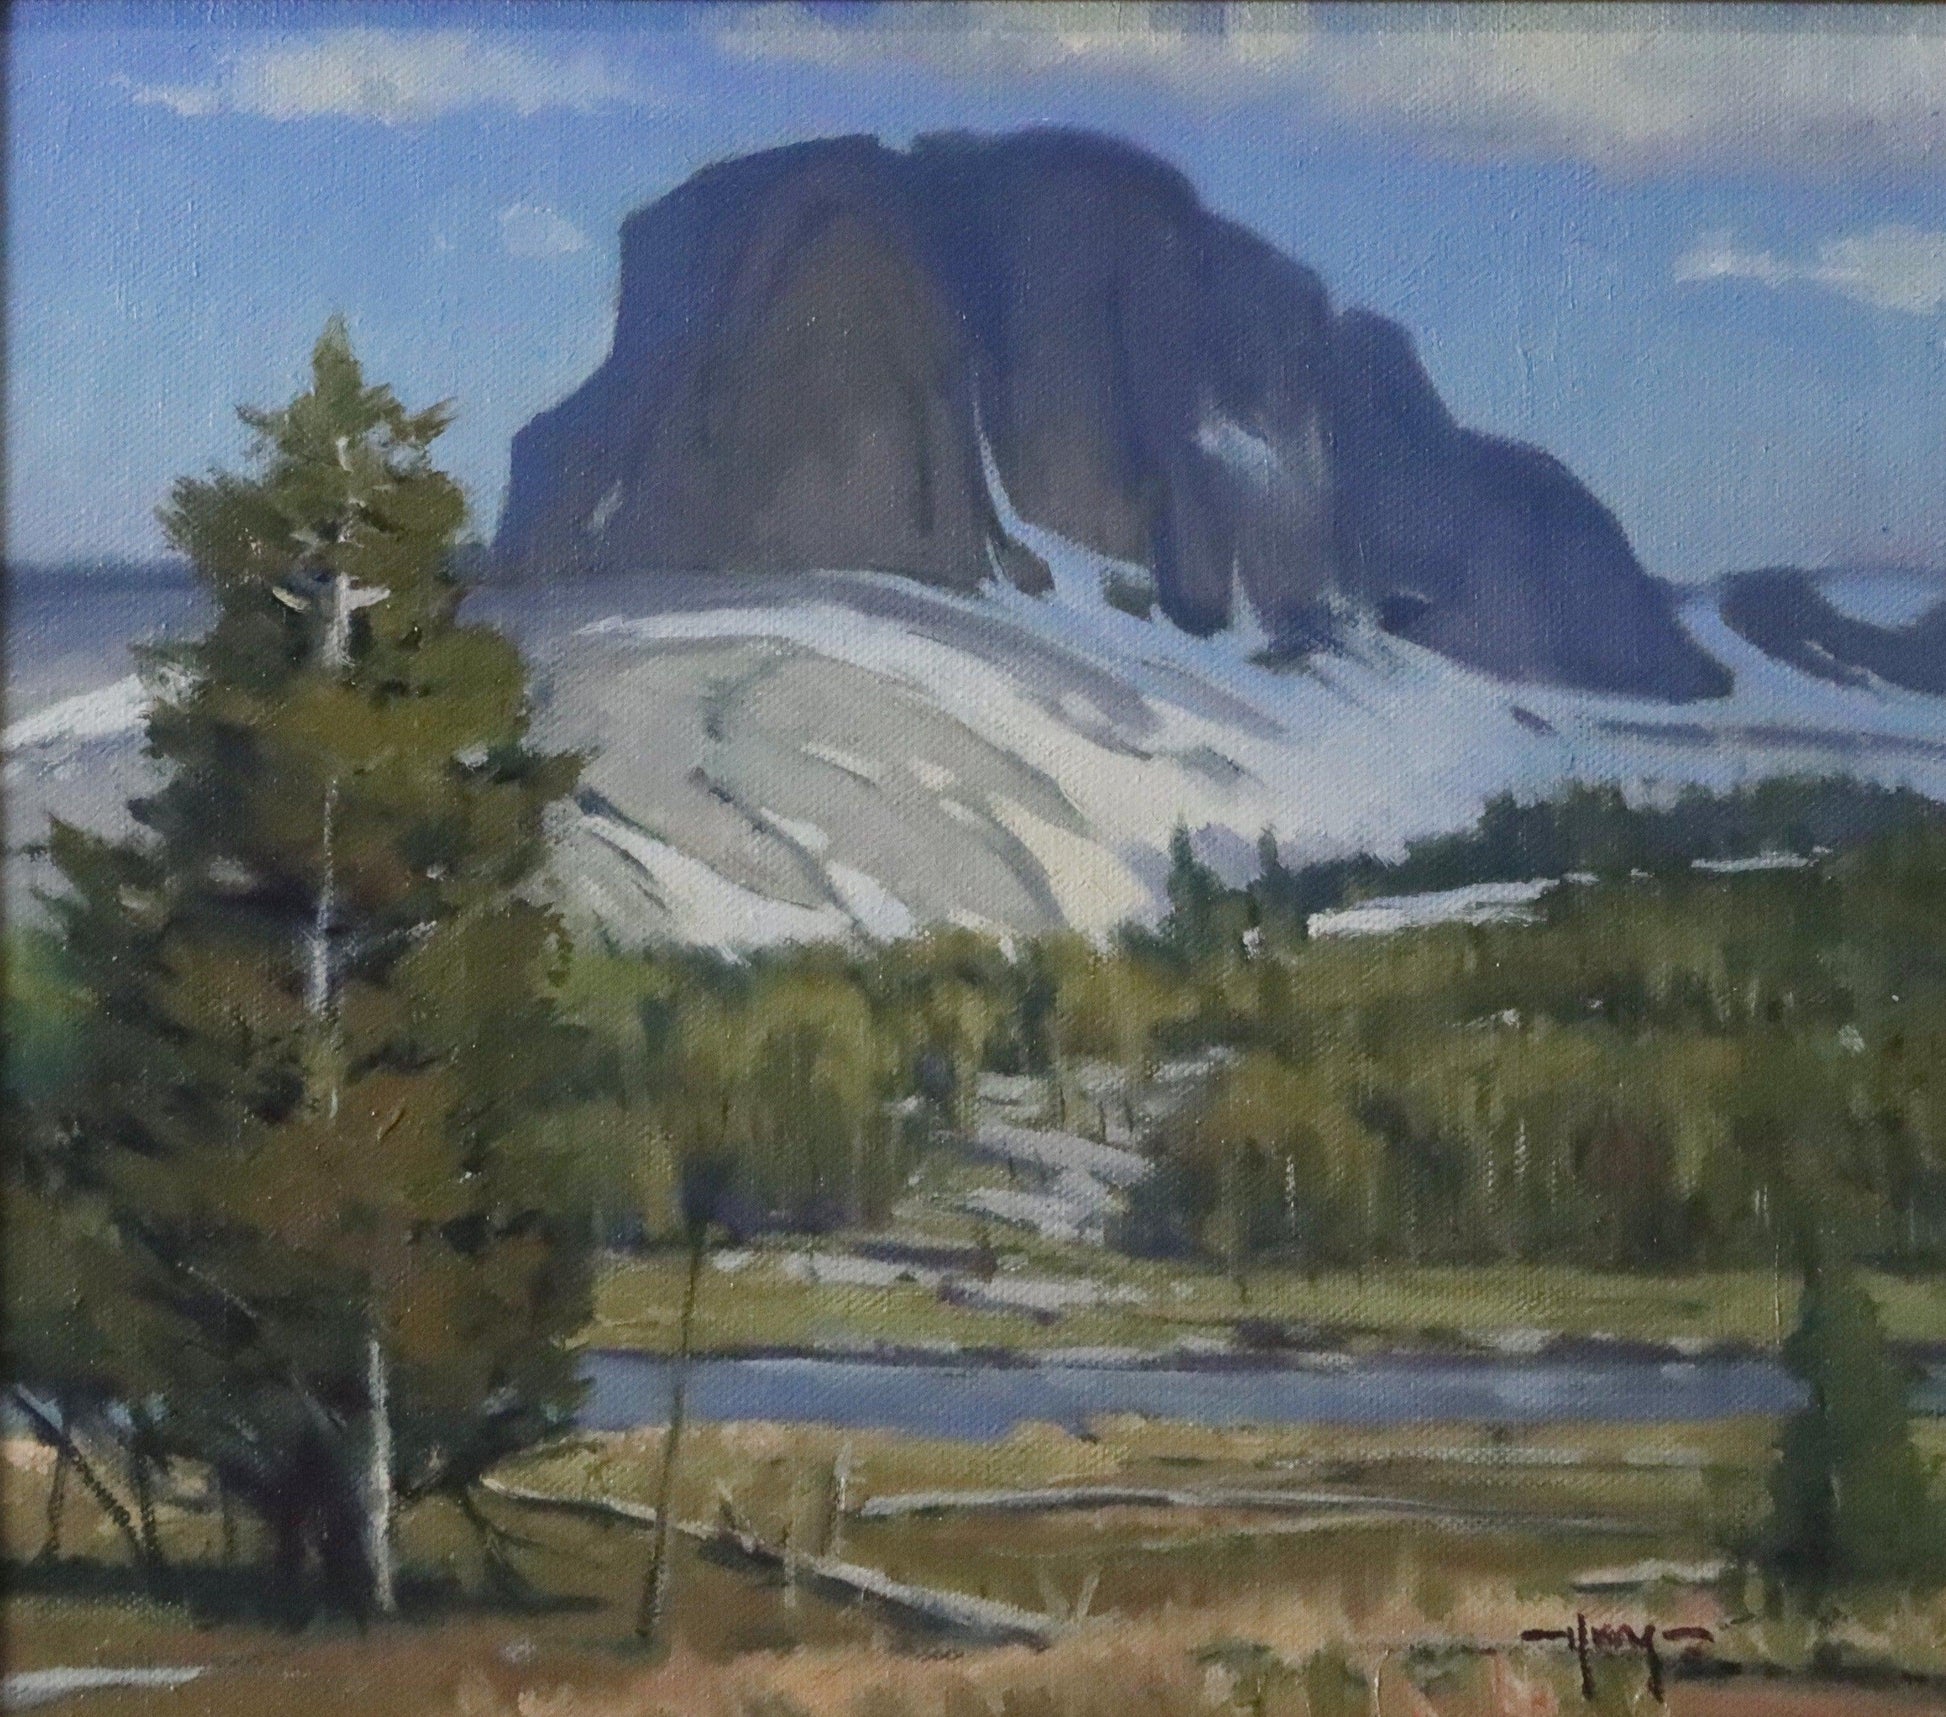 West Yellowstone-Painting-Keith Huey-Sorrel Sky Gallery